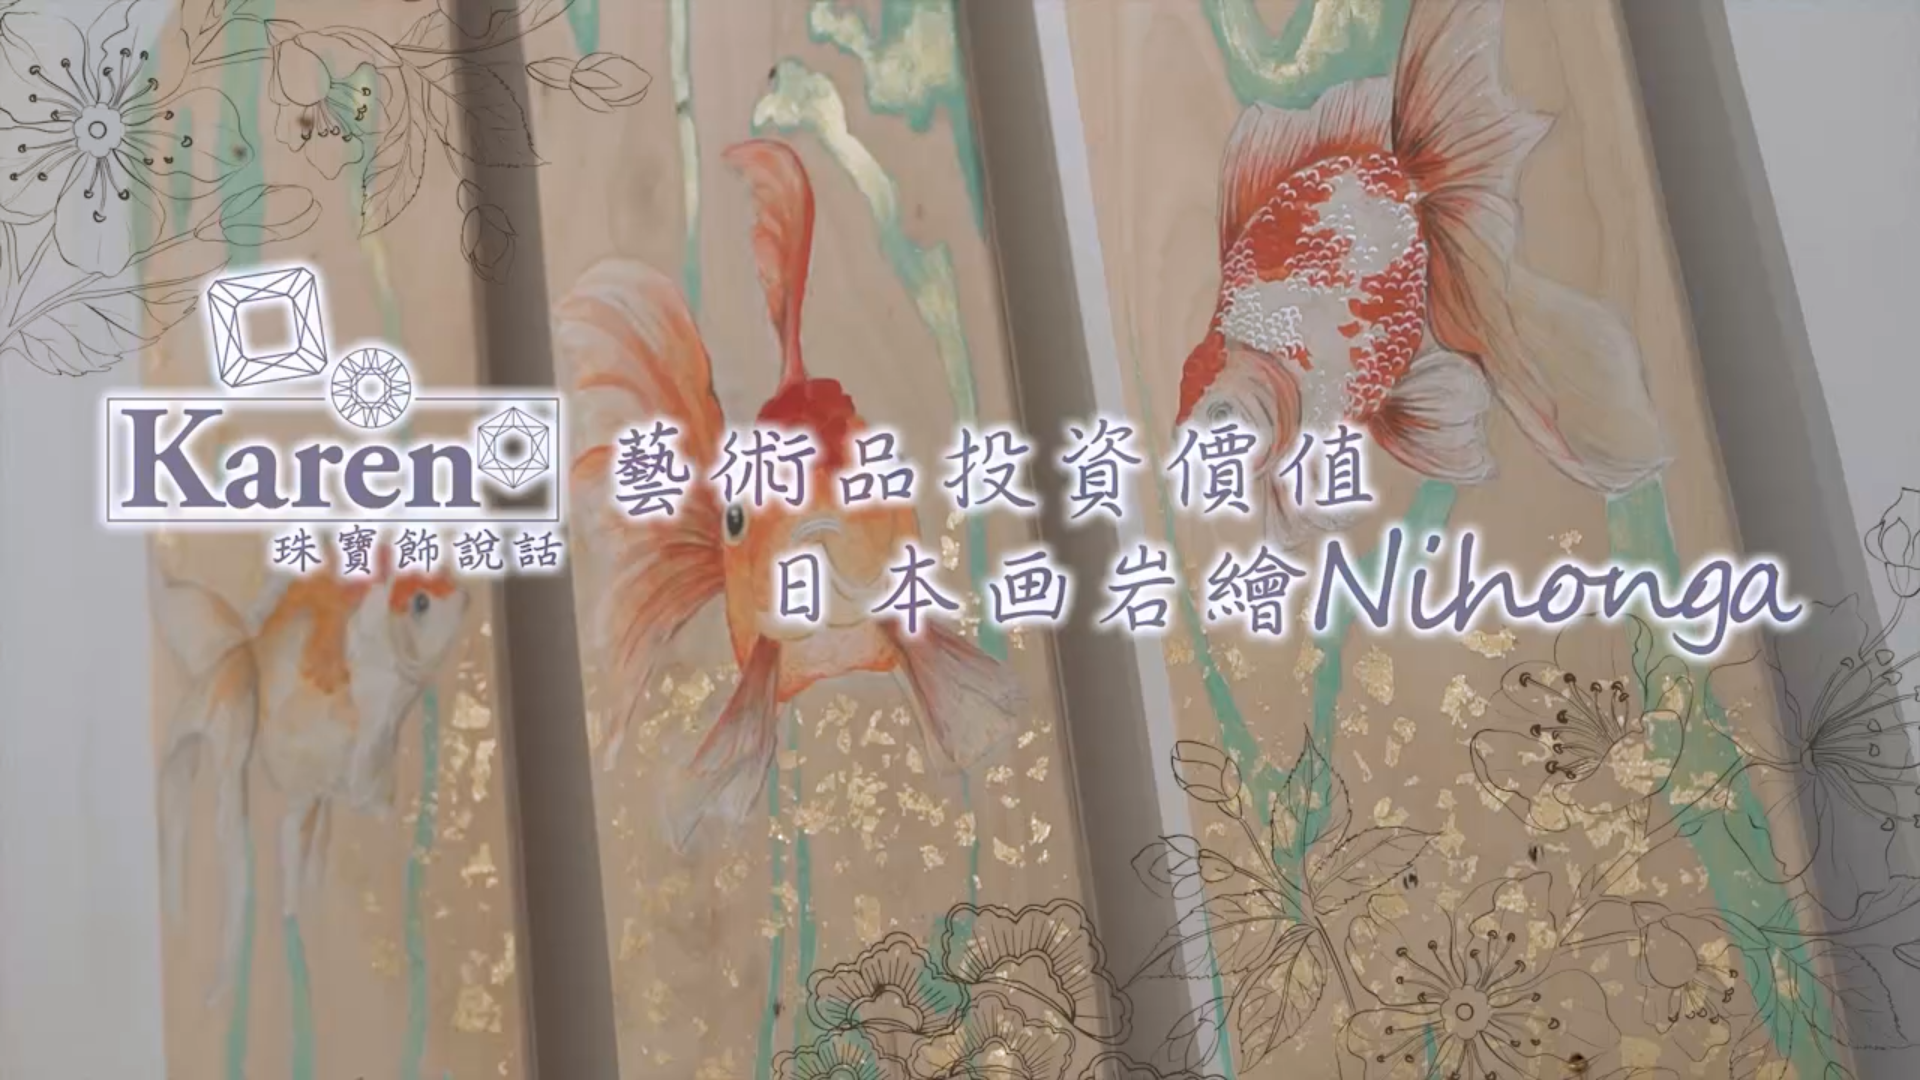 Karen 珠寶飾説話 – Nihonga 日本画岩繪 珍貴畫作 藝術品投資價值一談